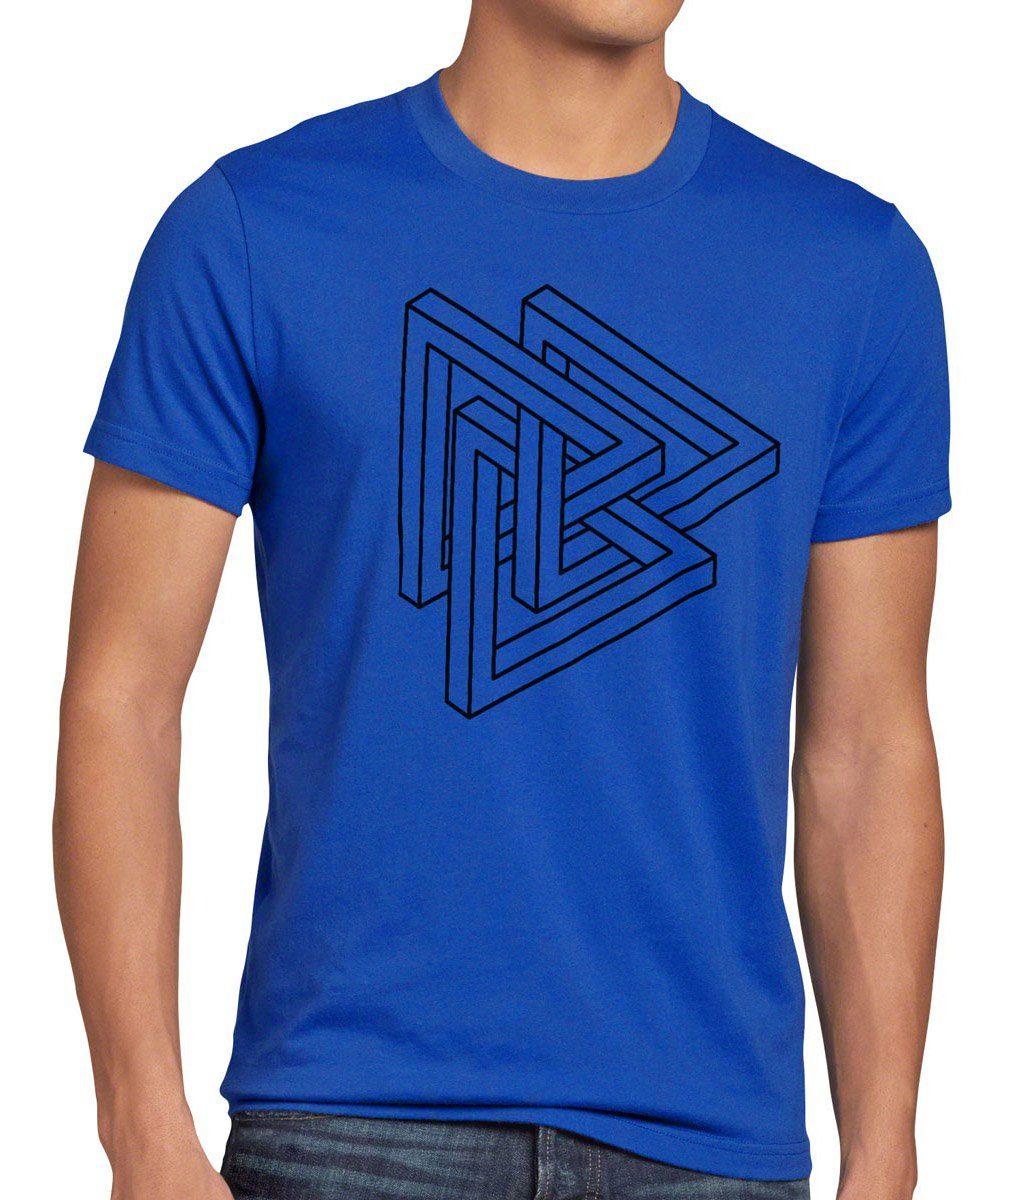 style3 Print-Shirt Herren T-Shirt Penrose Big Bang Sheldon Escher Cooper Dreieck Würfel Theory geo blau